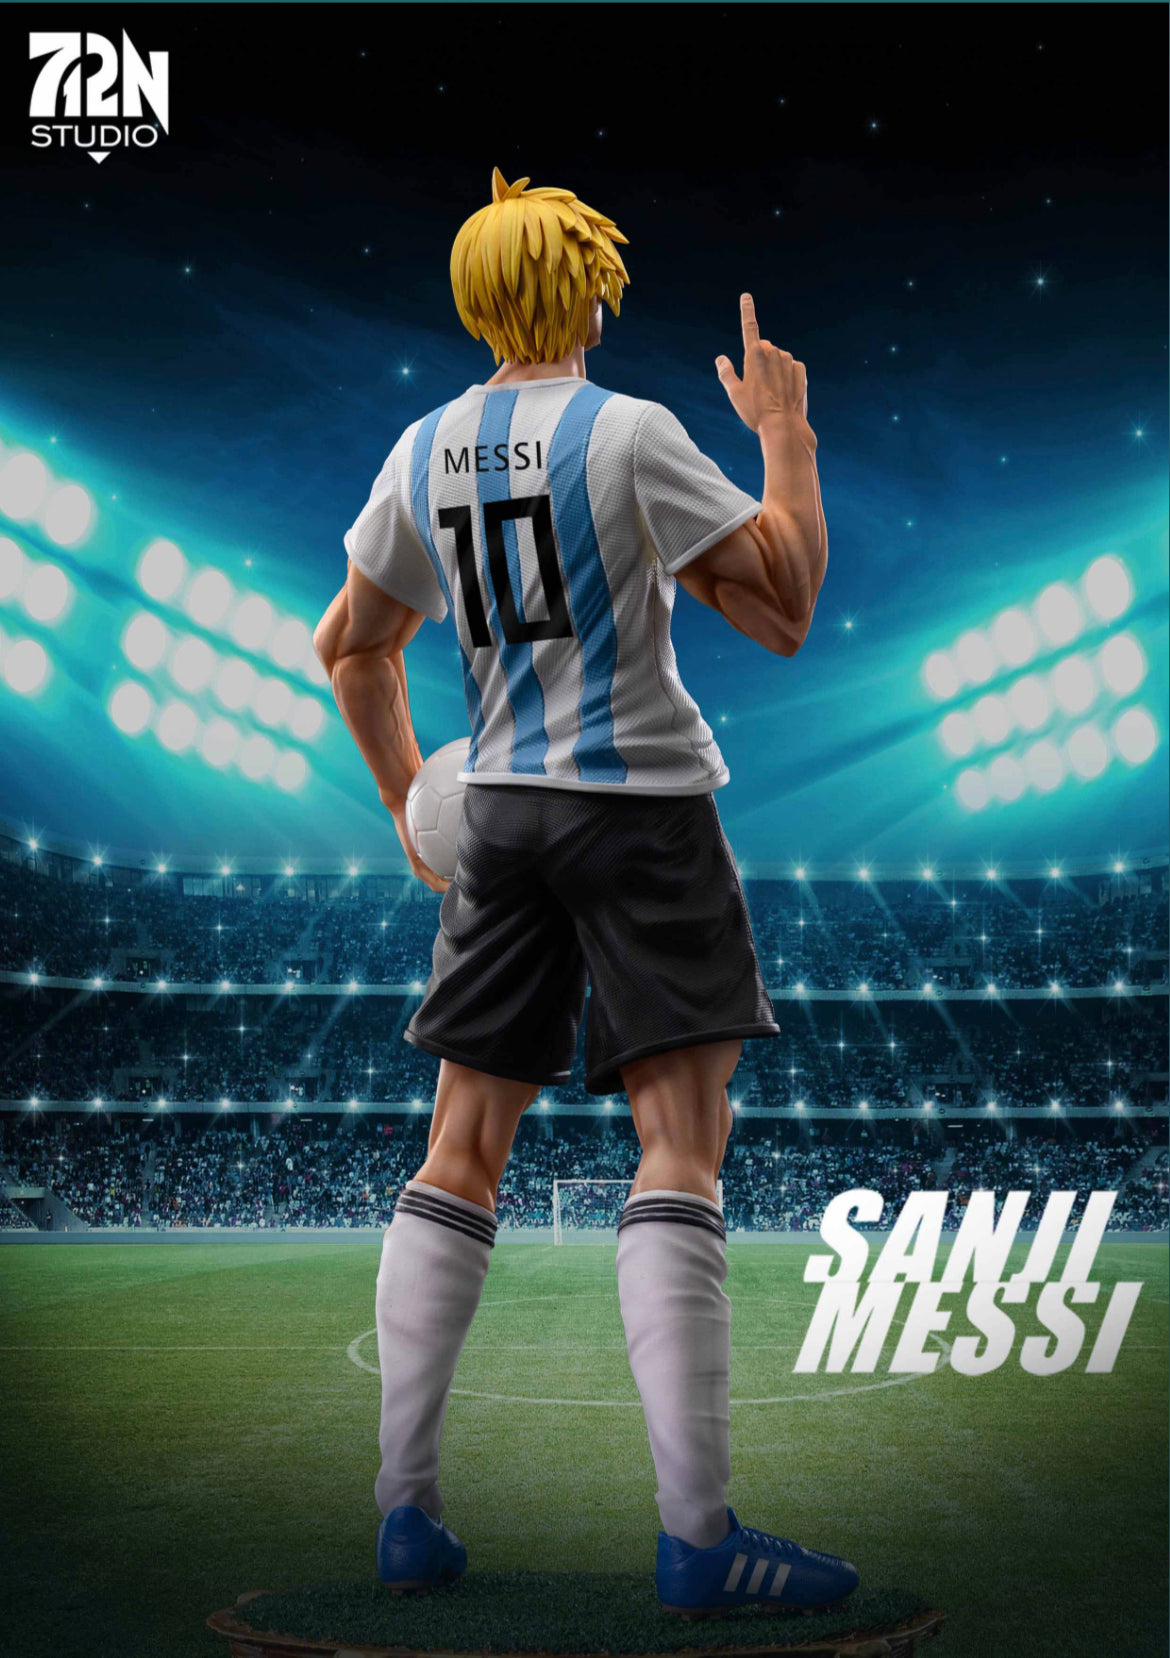 One Piece - 712N Studios Sanji x Messi